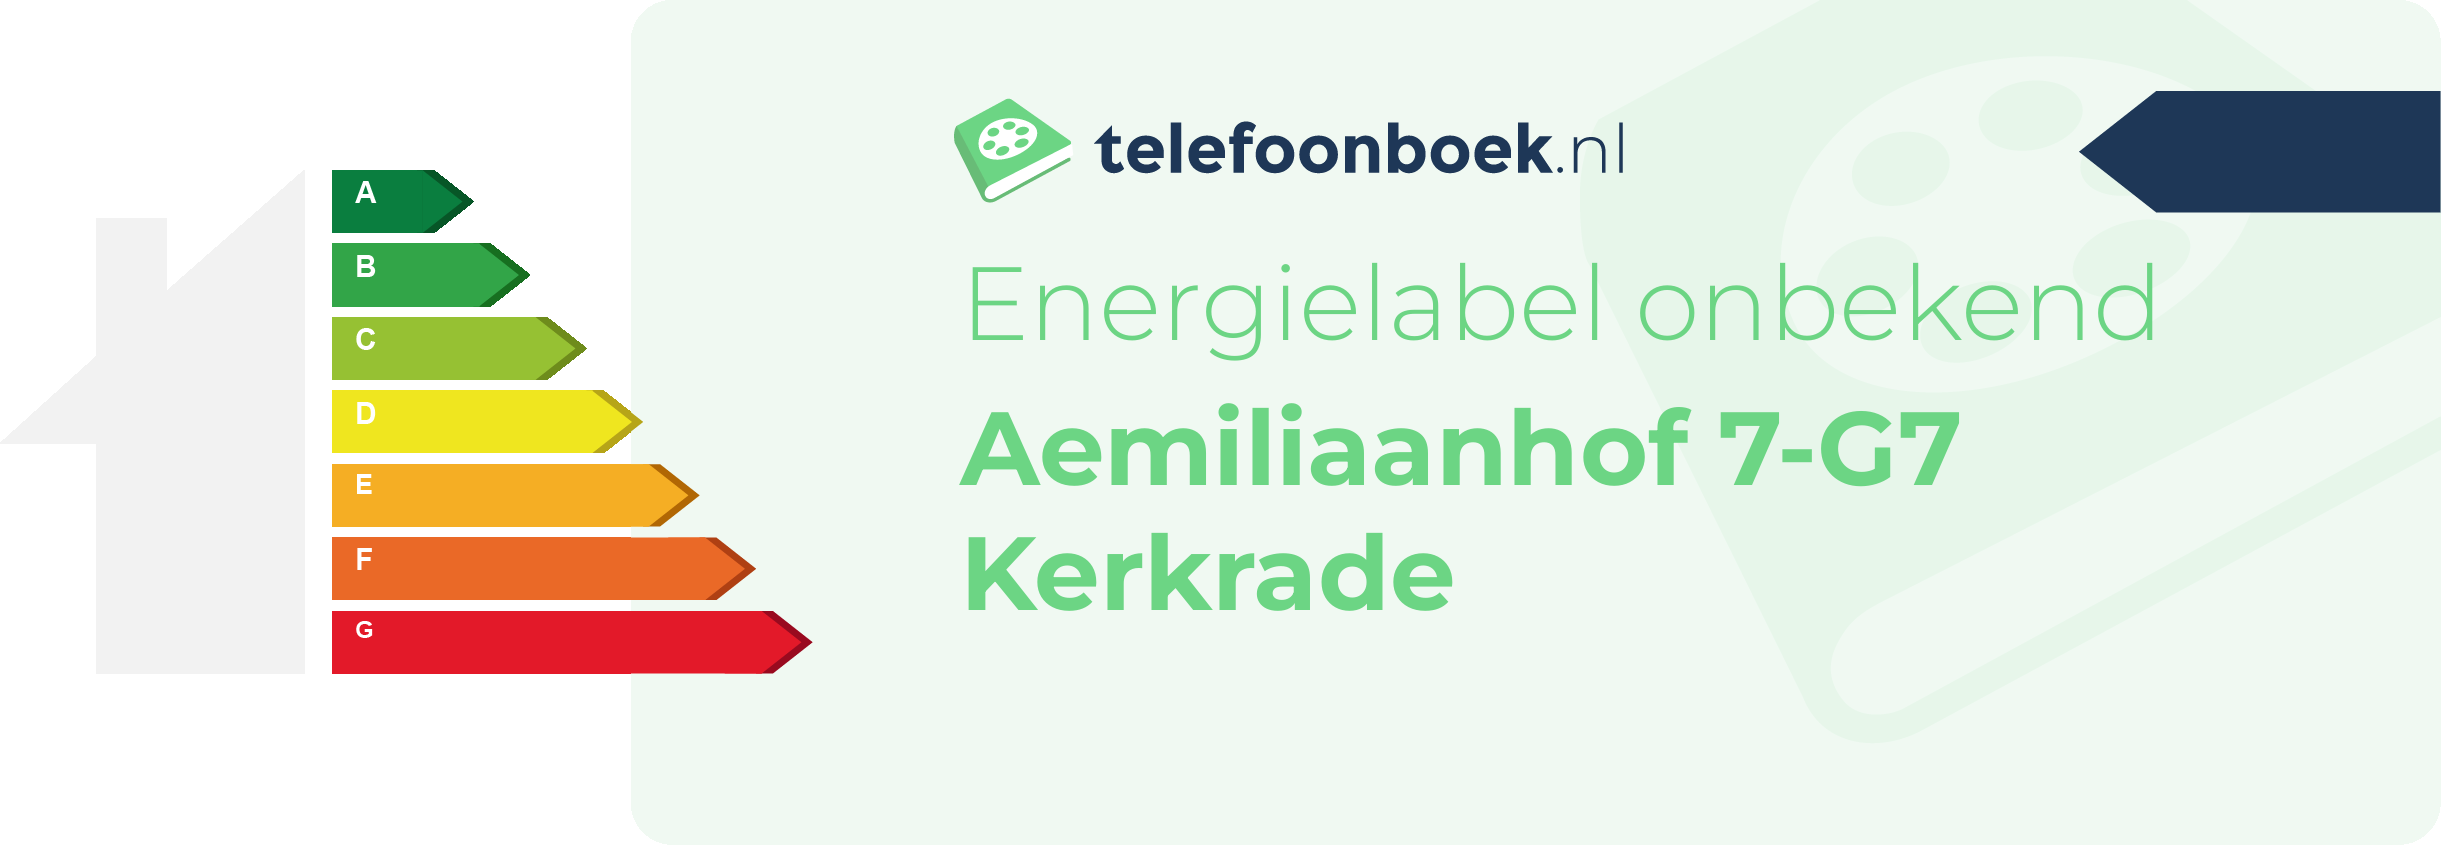 Energielabel Aemiliaanhof 7-G7 Kerkrade